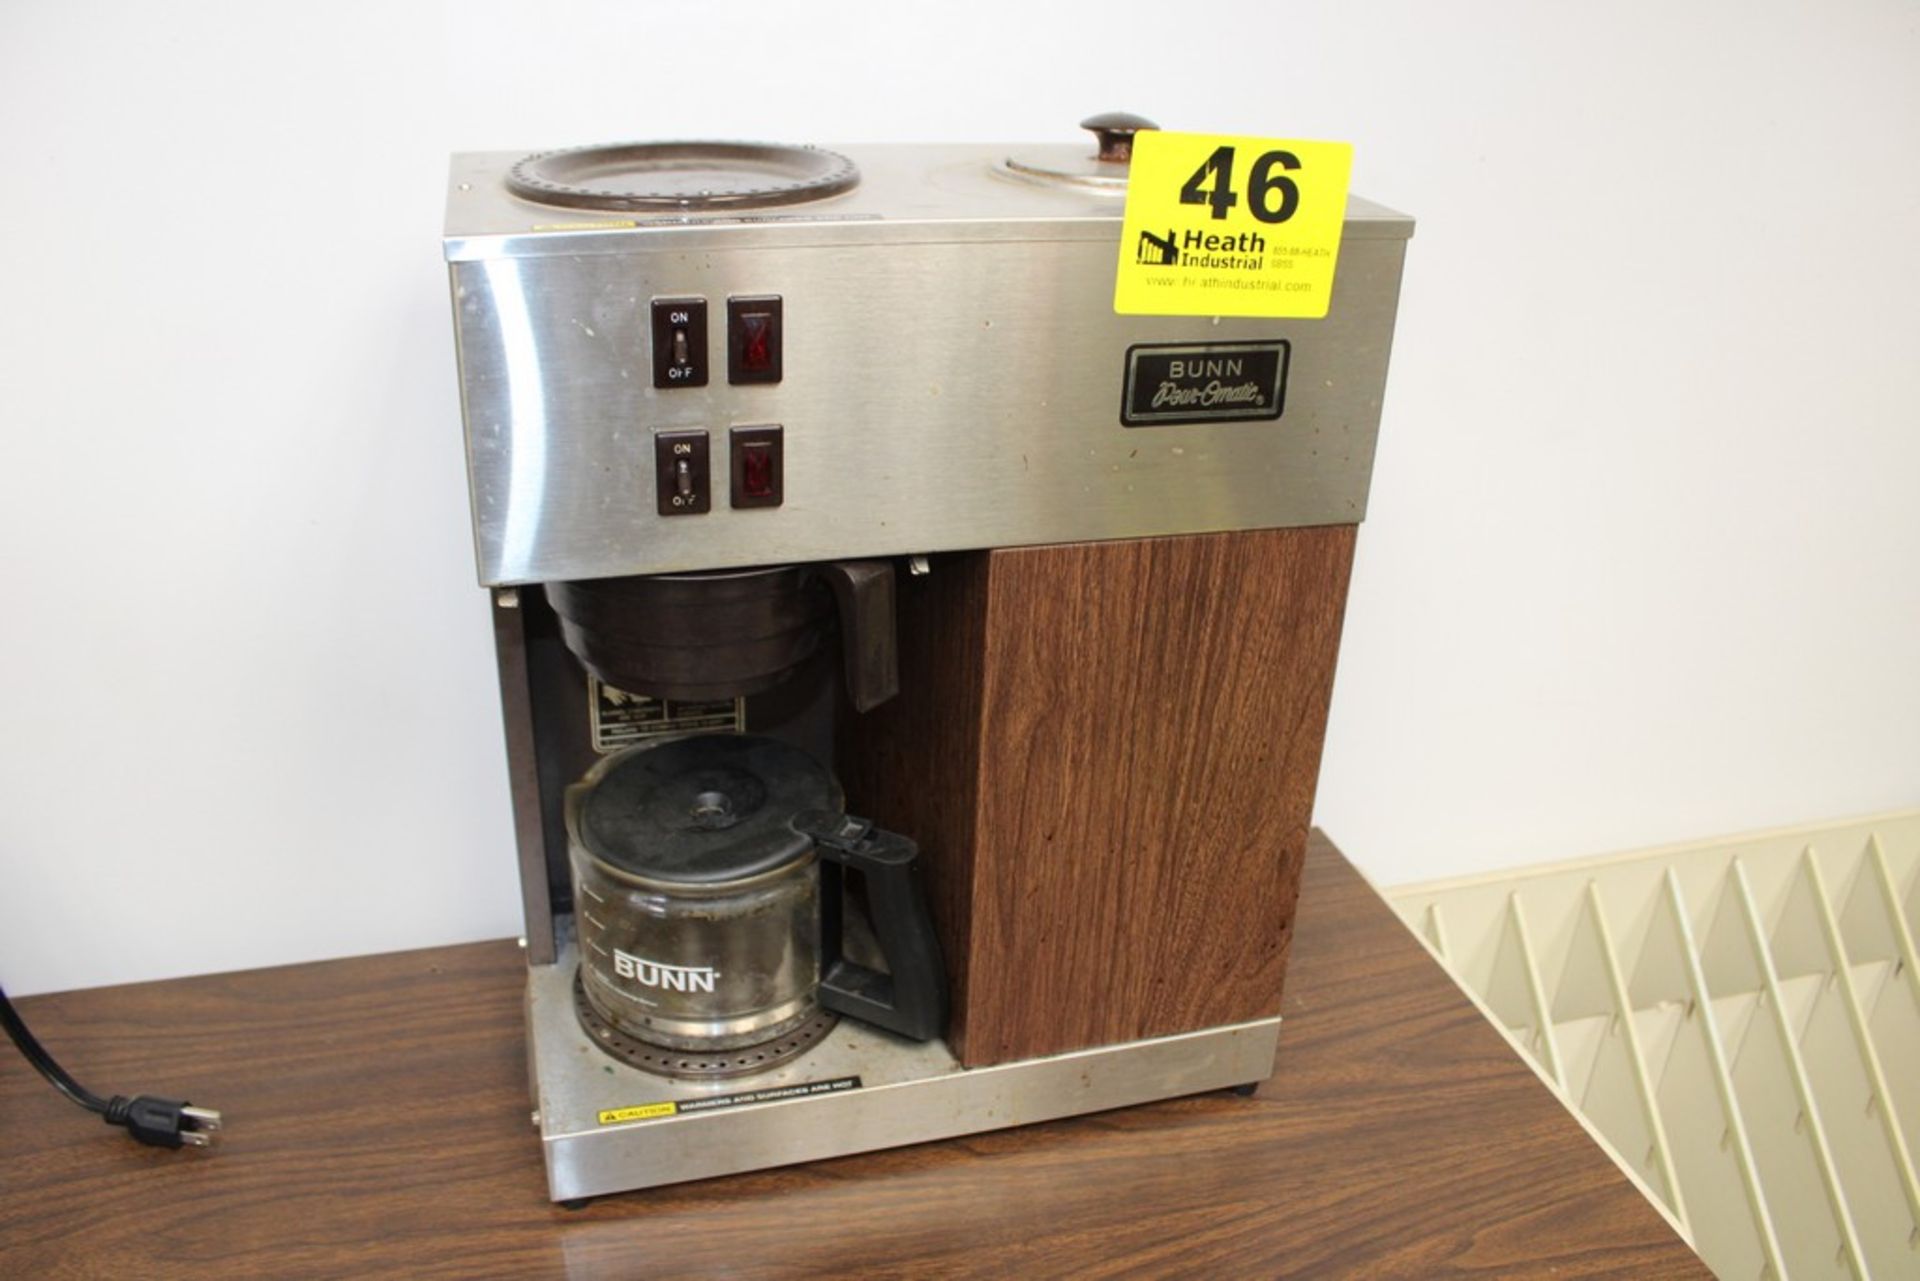 BUNN POUR-O-MATIC COFFEE MAKER, MODEL VPR